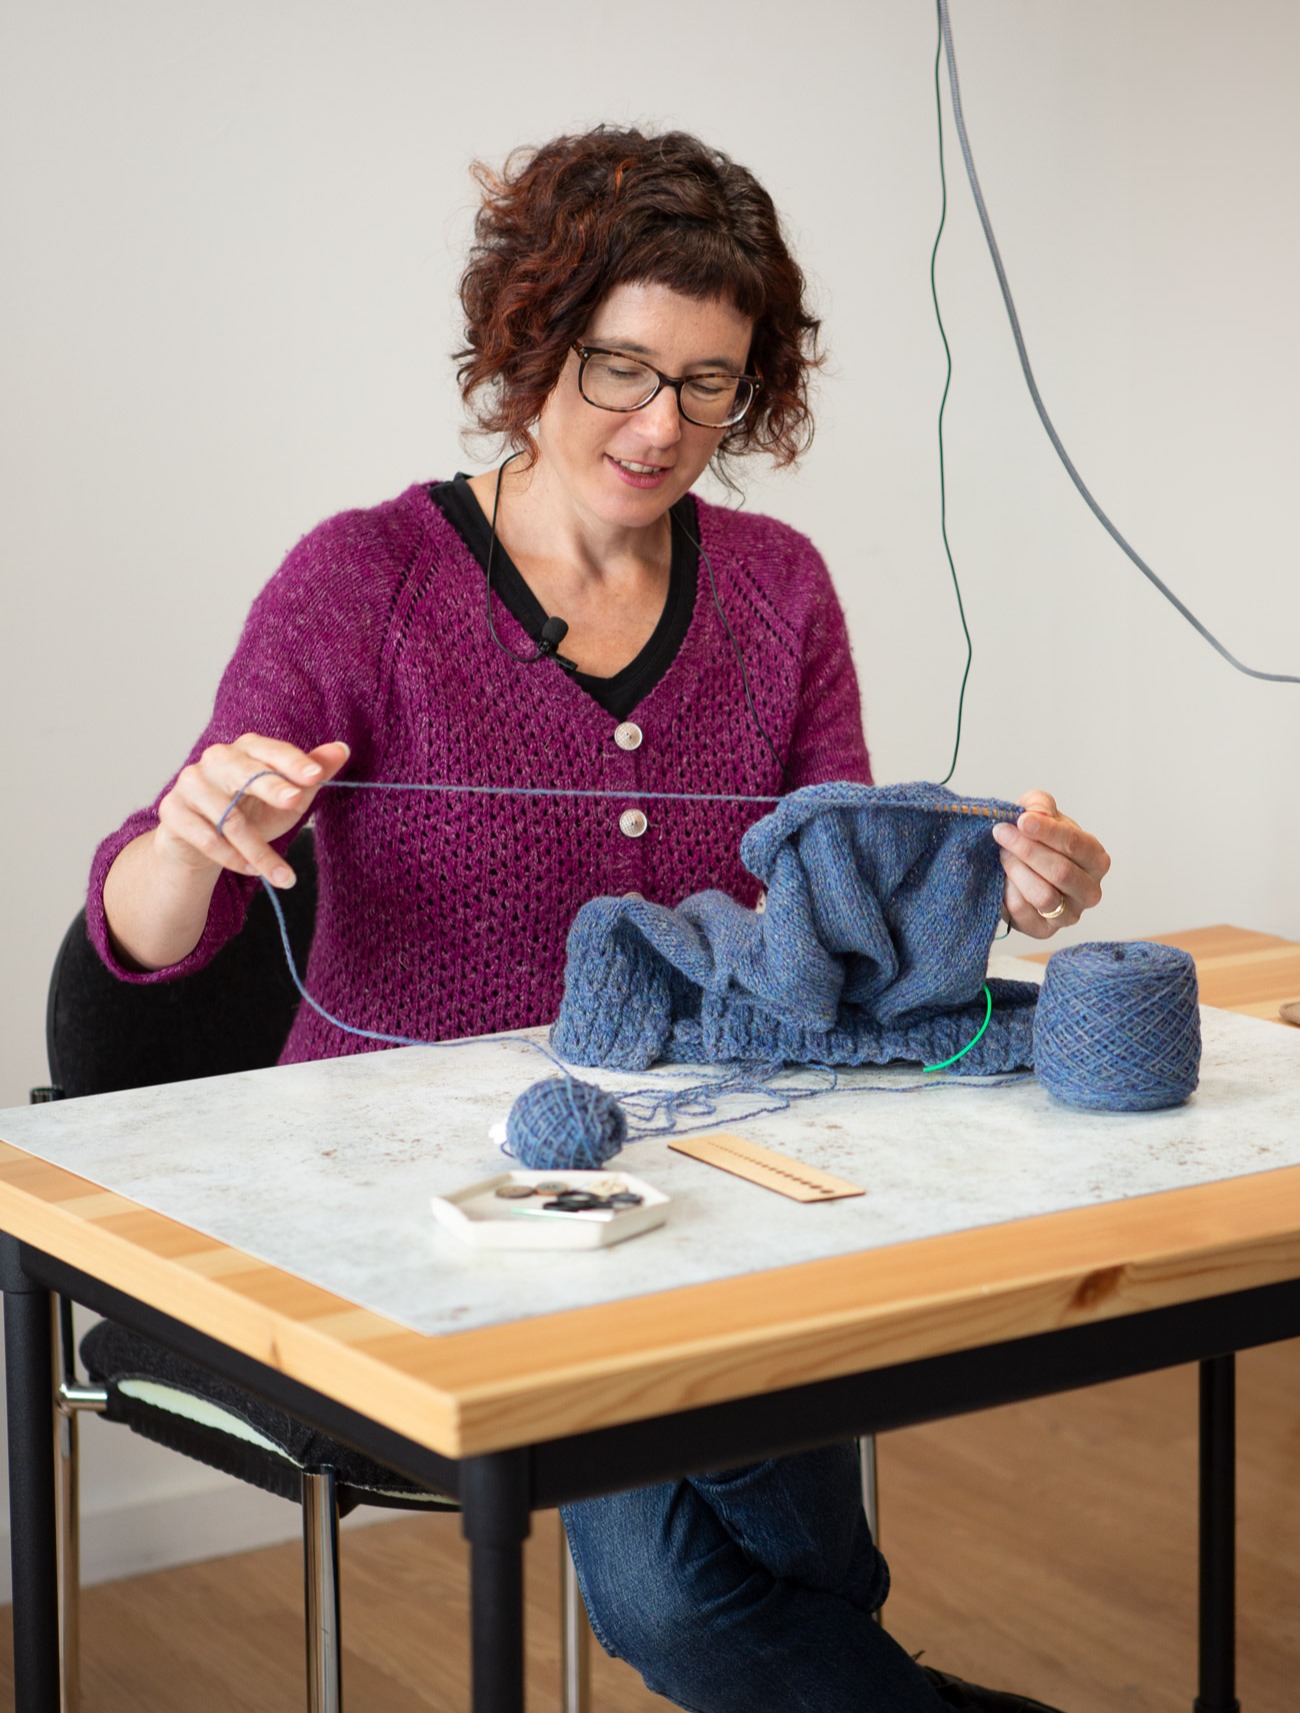 Carol Feller recording workshop with knitting in her hands